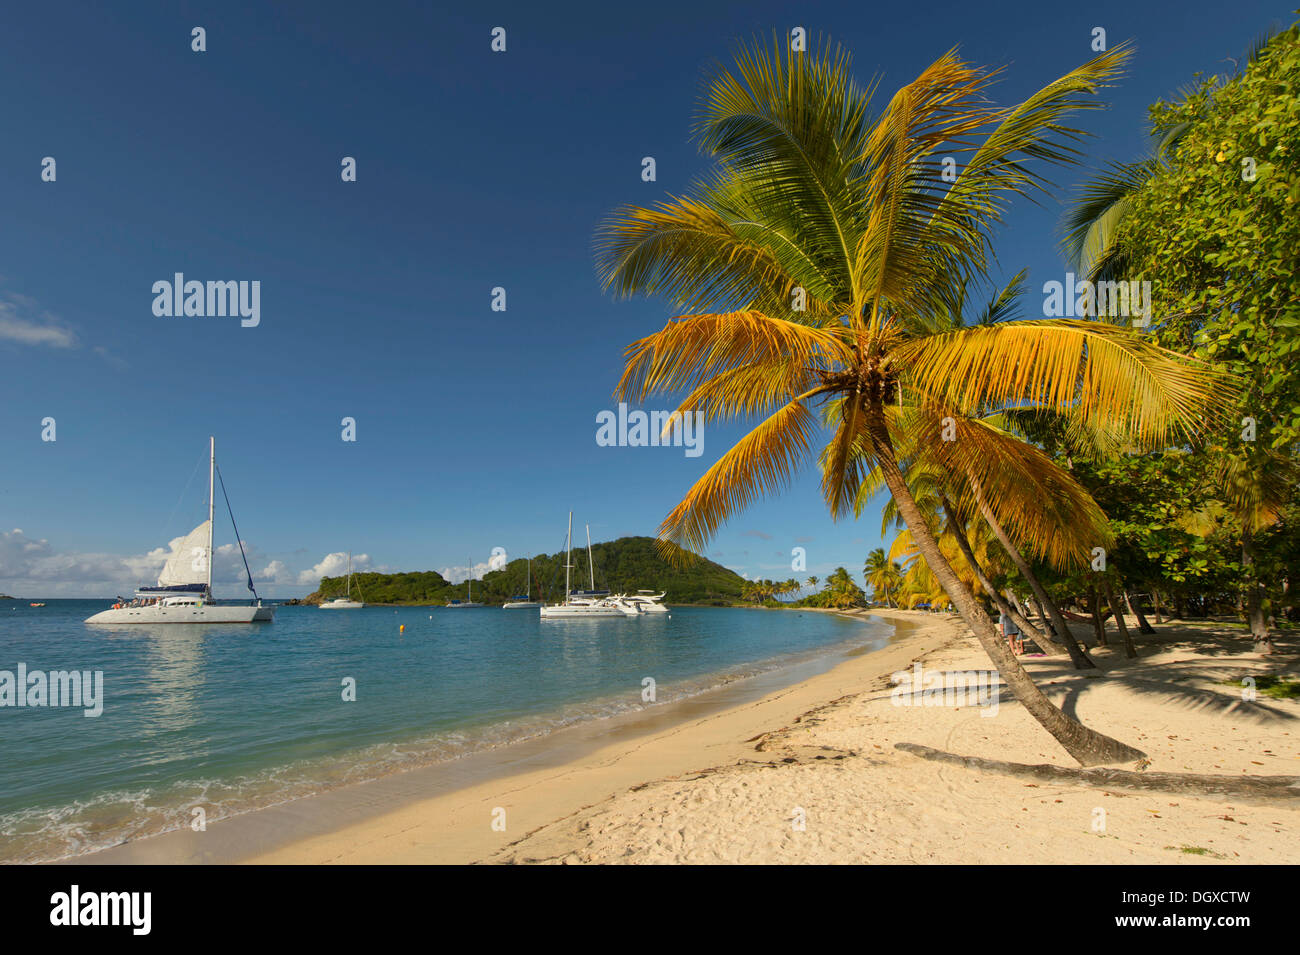 Caribbean Bay with palm trees and boats, Grenadines, Karibik, Saint Lucia Stock Photo